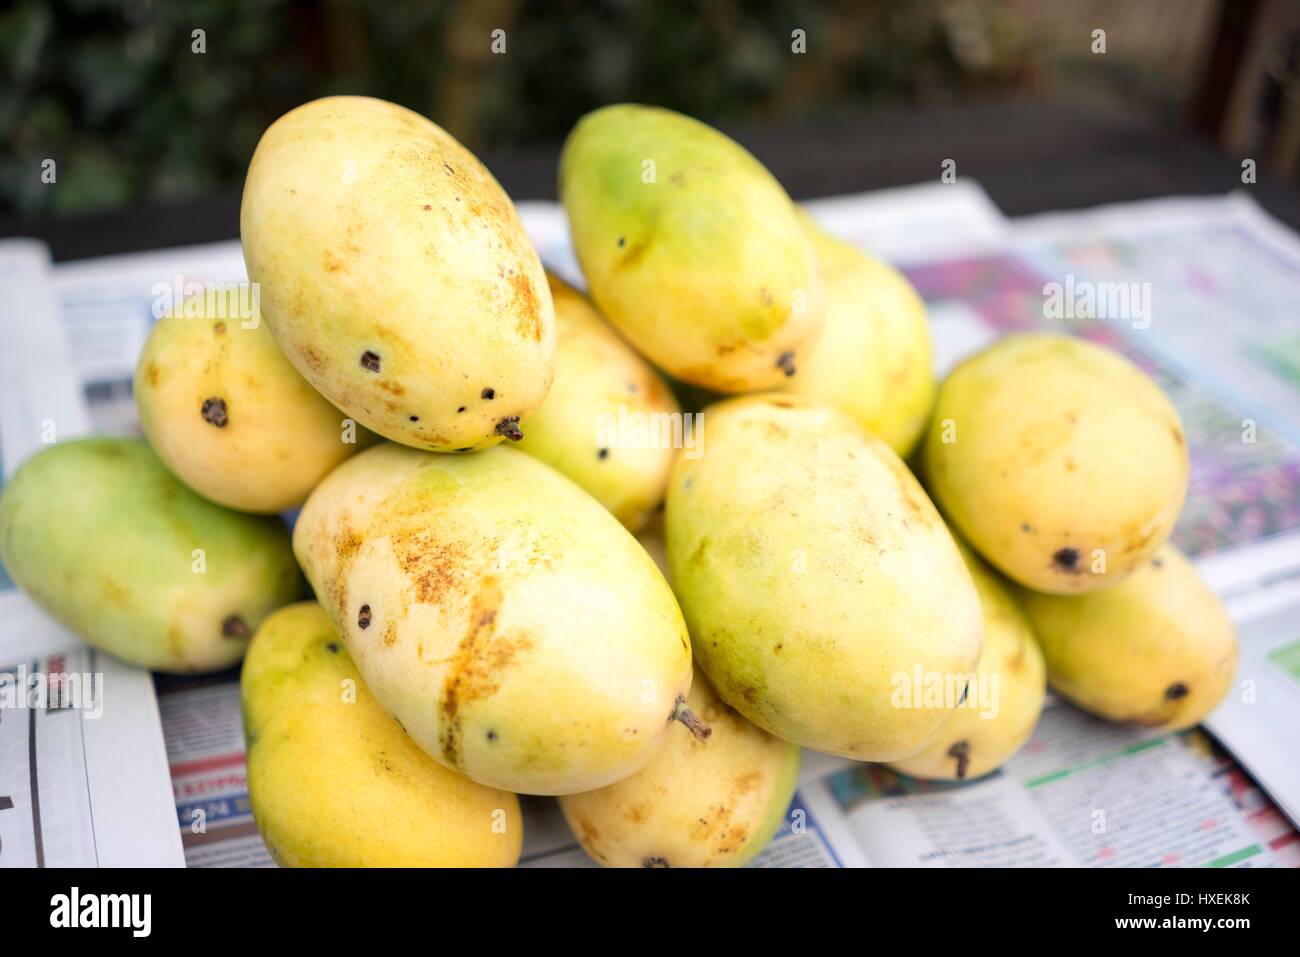 Philippines yellow mangoes Stock Photo Alamy